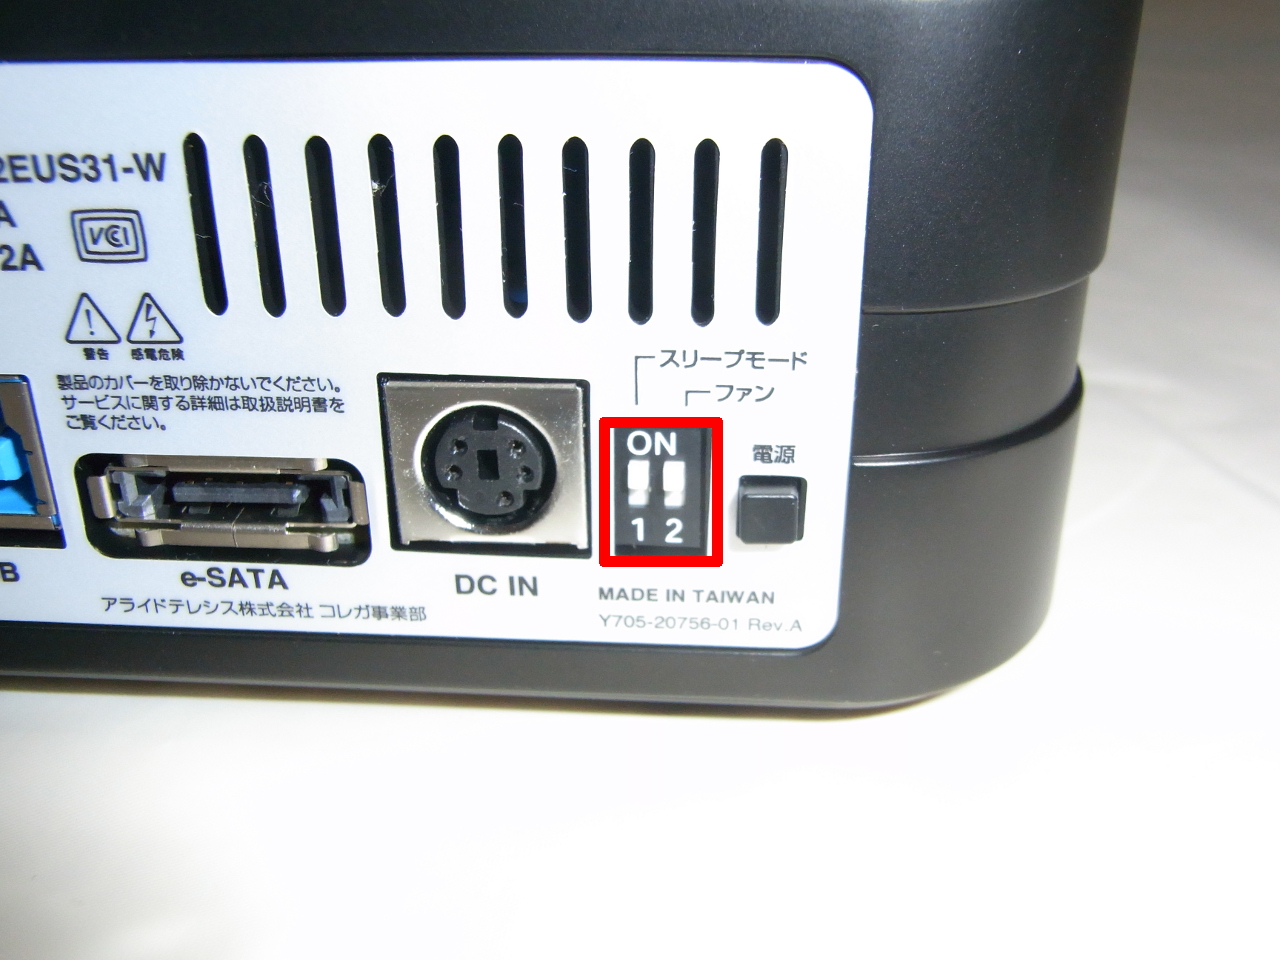 CG-HDC2EUS31-WのPC連動電源とファンの設定スイッチ